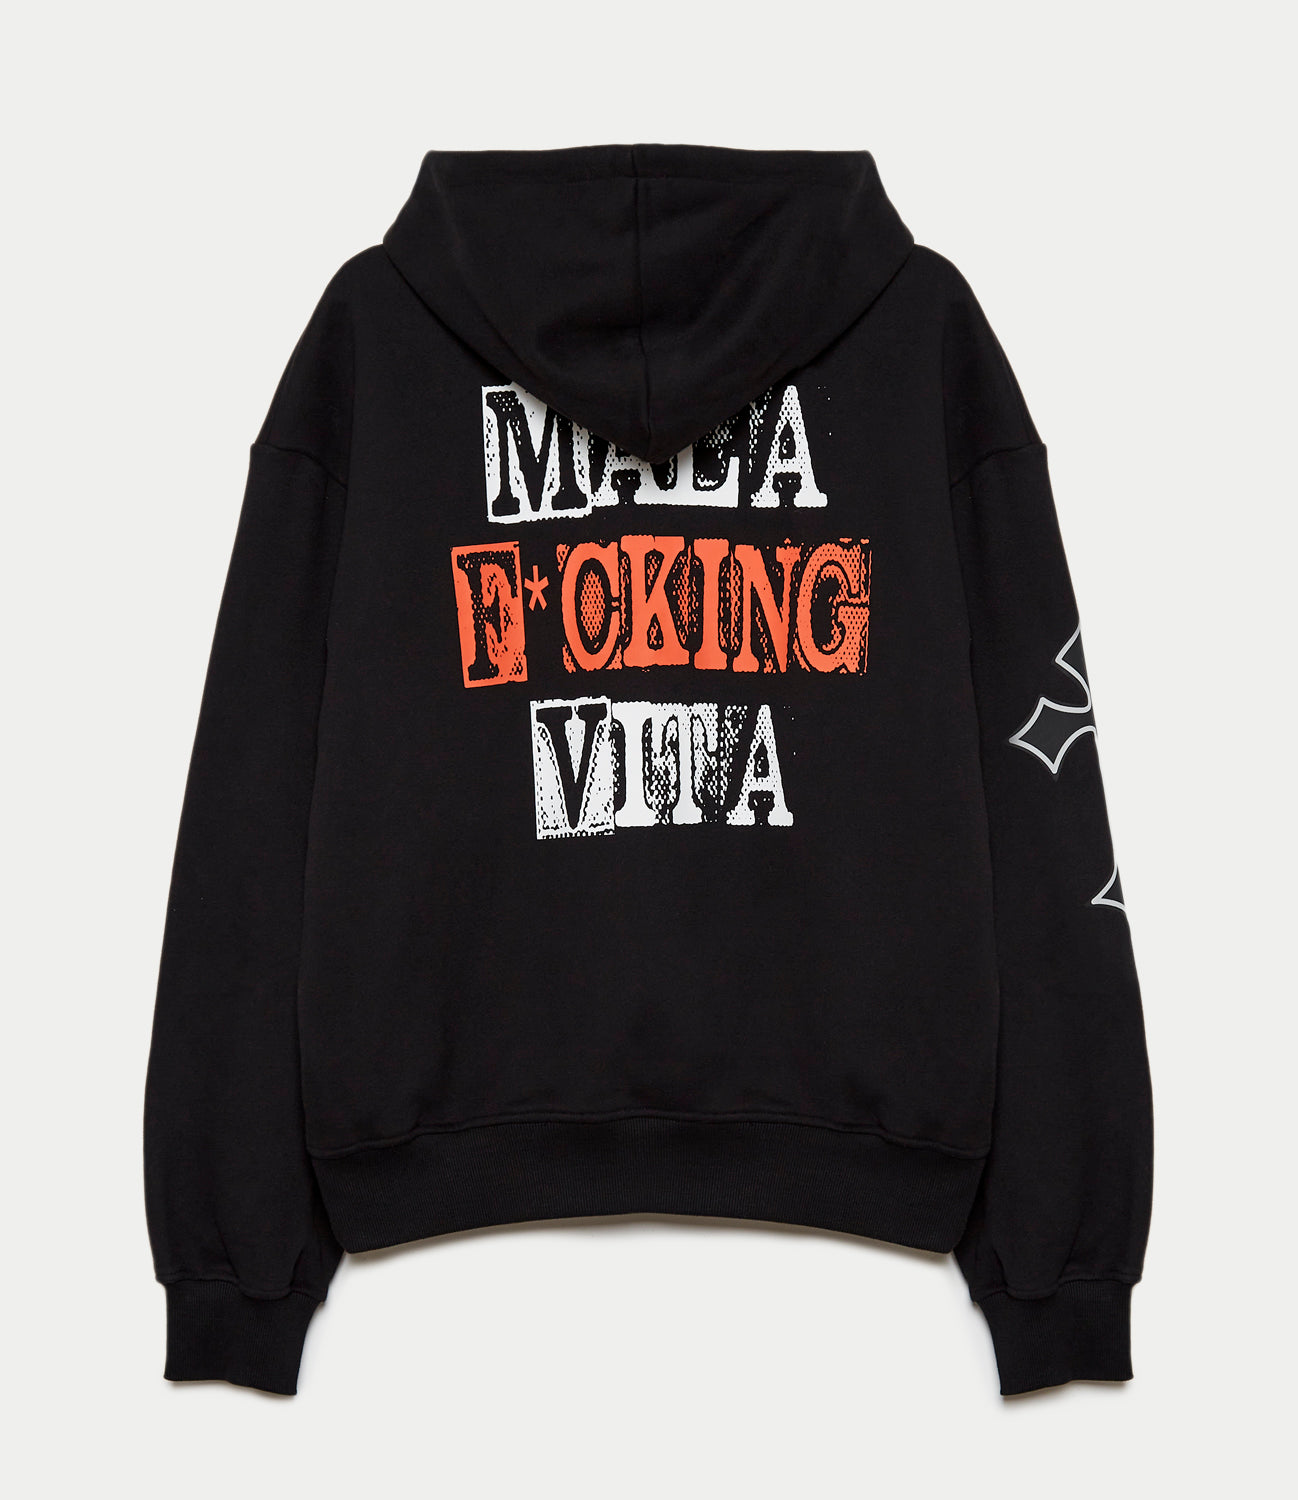 Mala f*cking vita hoodie